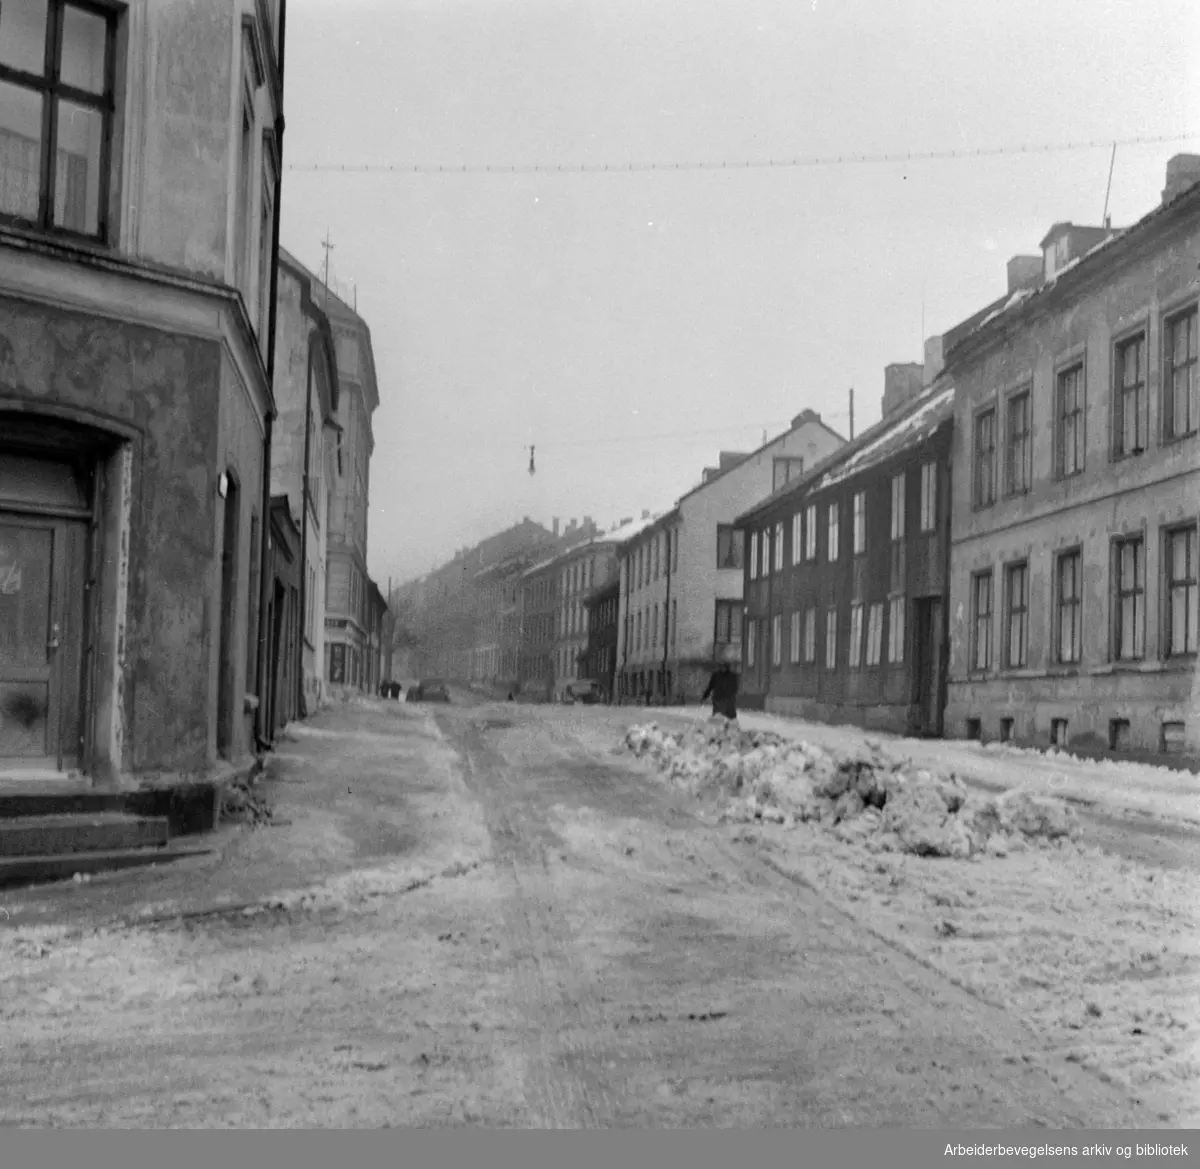 Øvre gate. Gården helt til venstre i bildet er Korsgata 10, med inngang i Øvre gate. Februar 1958